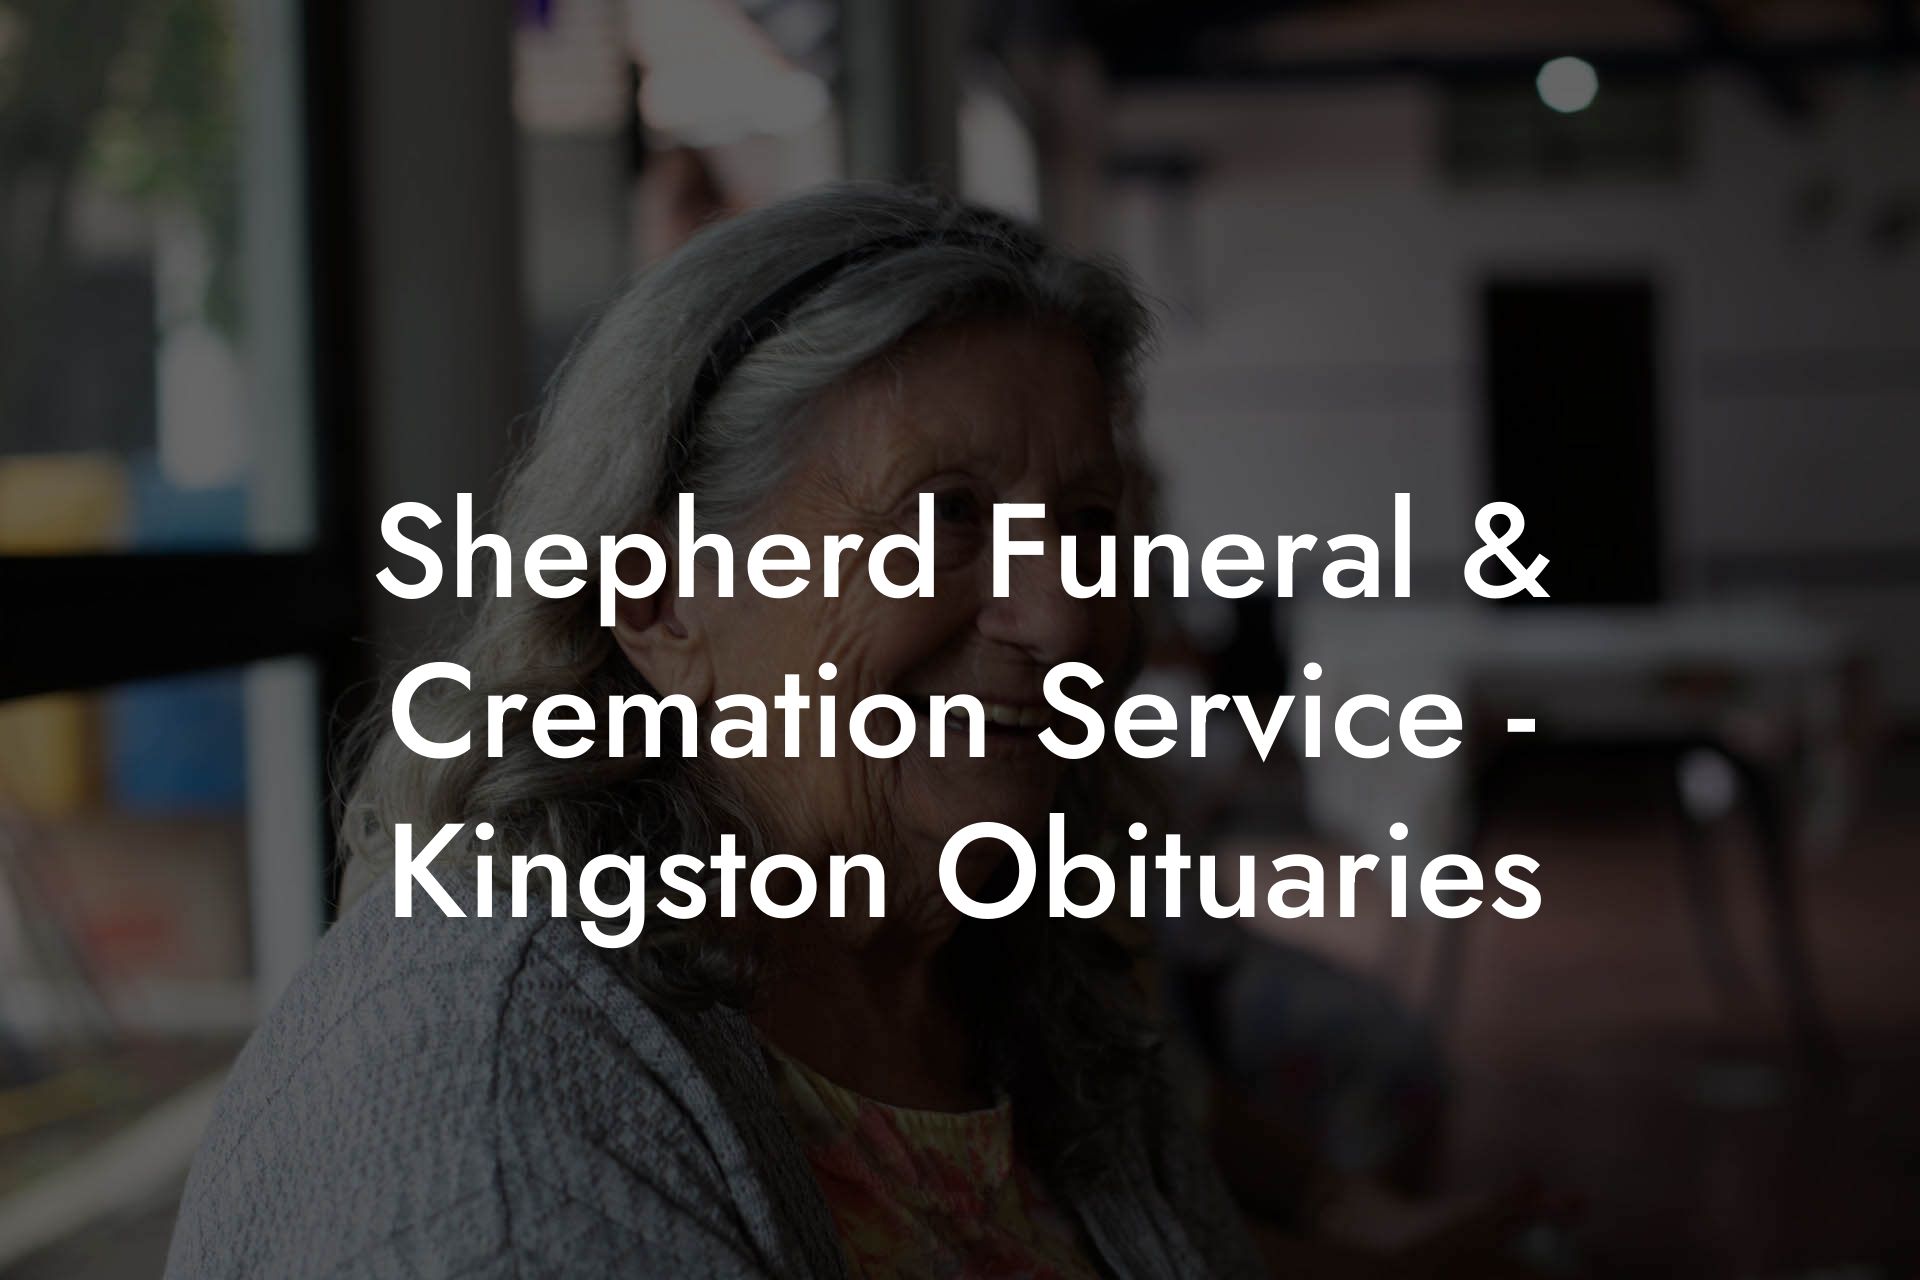 Shepherd Funeral & Cremation Service - Kingston Obituaries